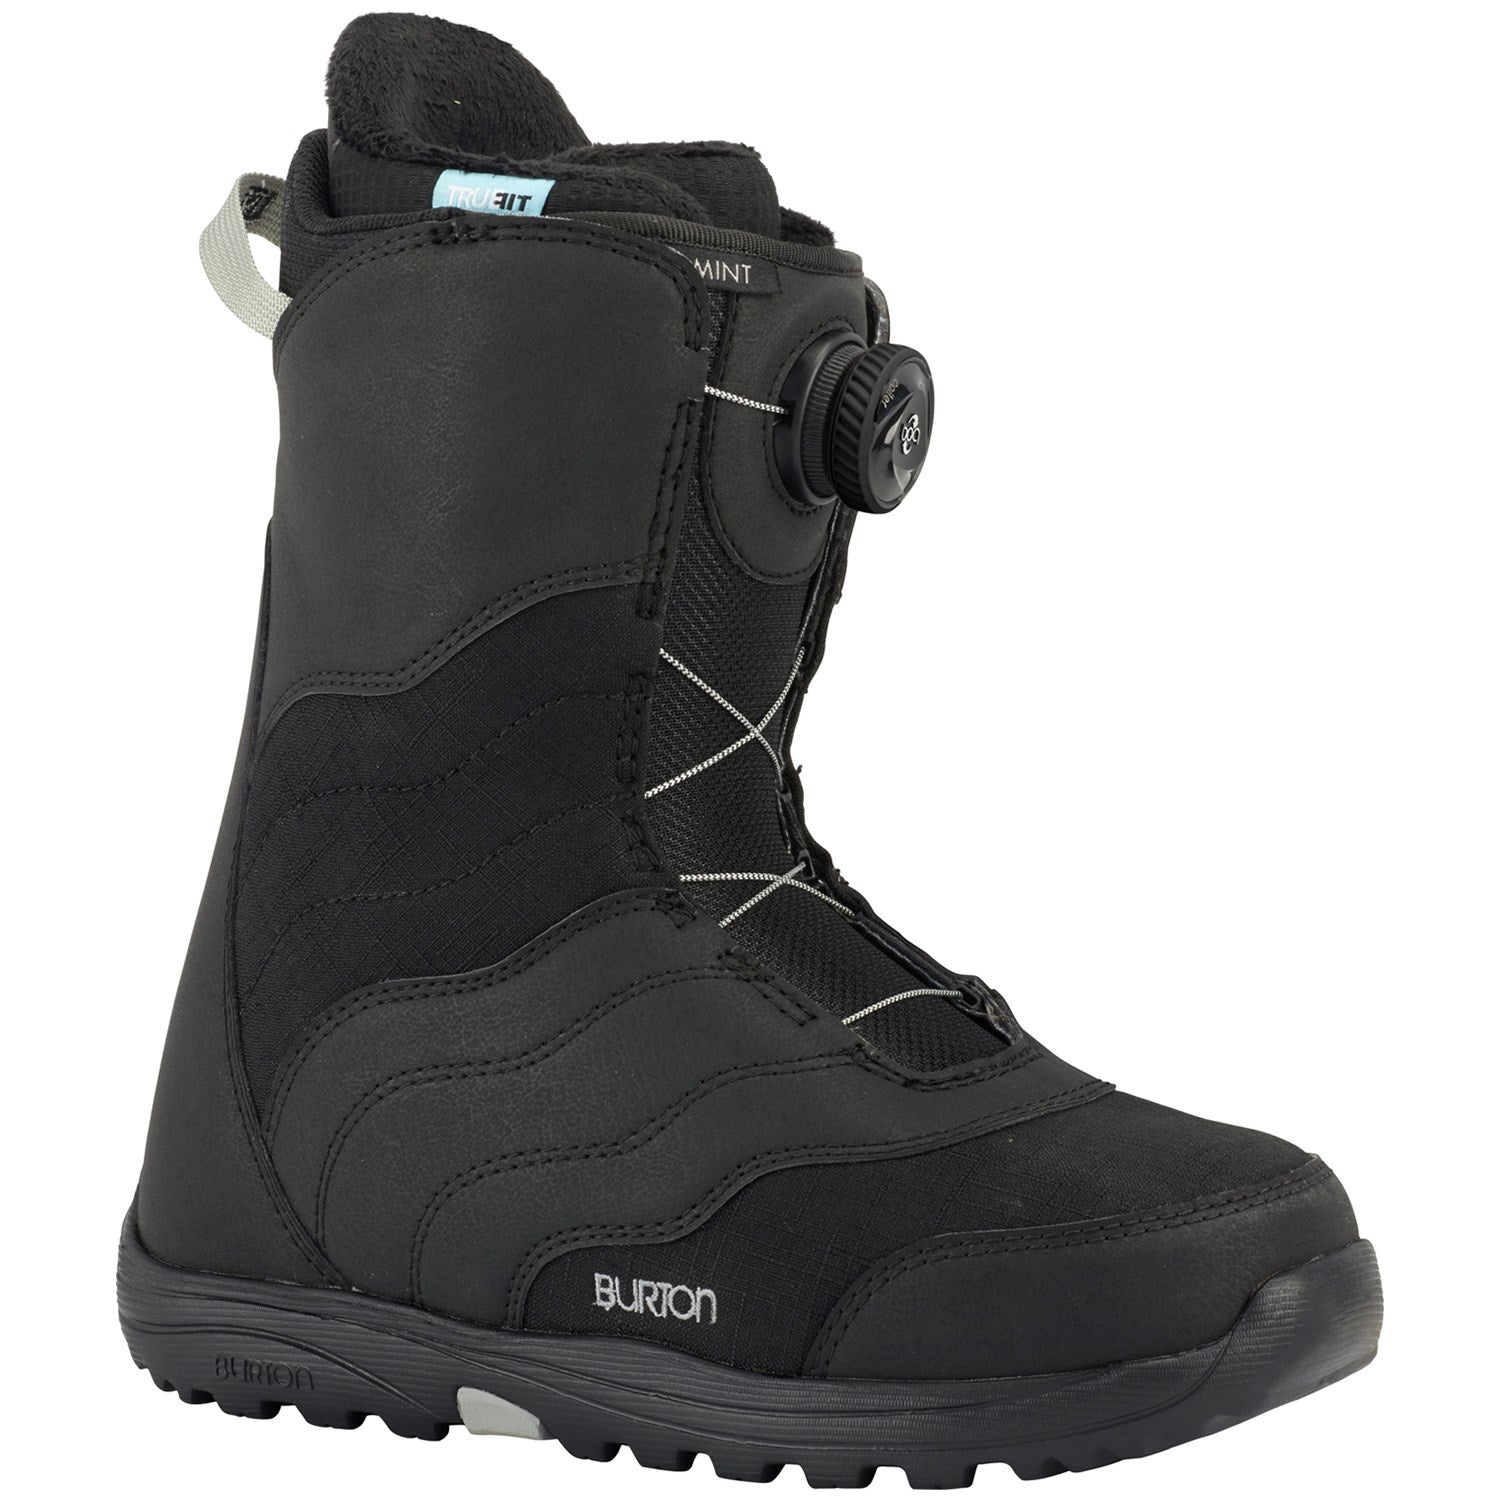 Burton Mint Women's Boot Size 5.0W Only SALE |